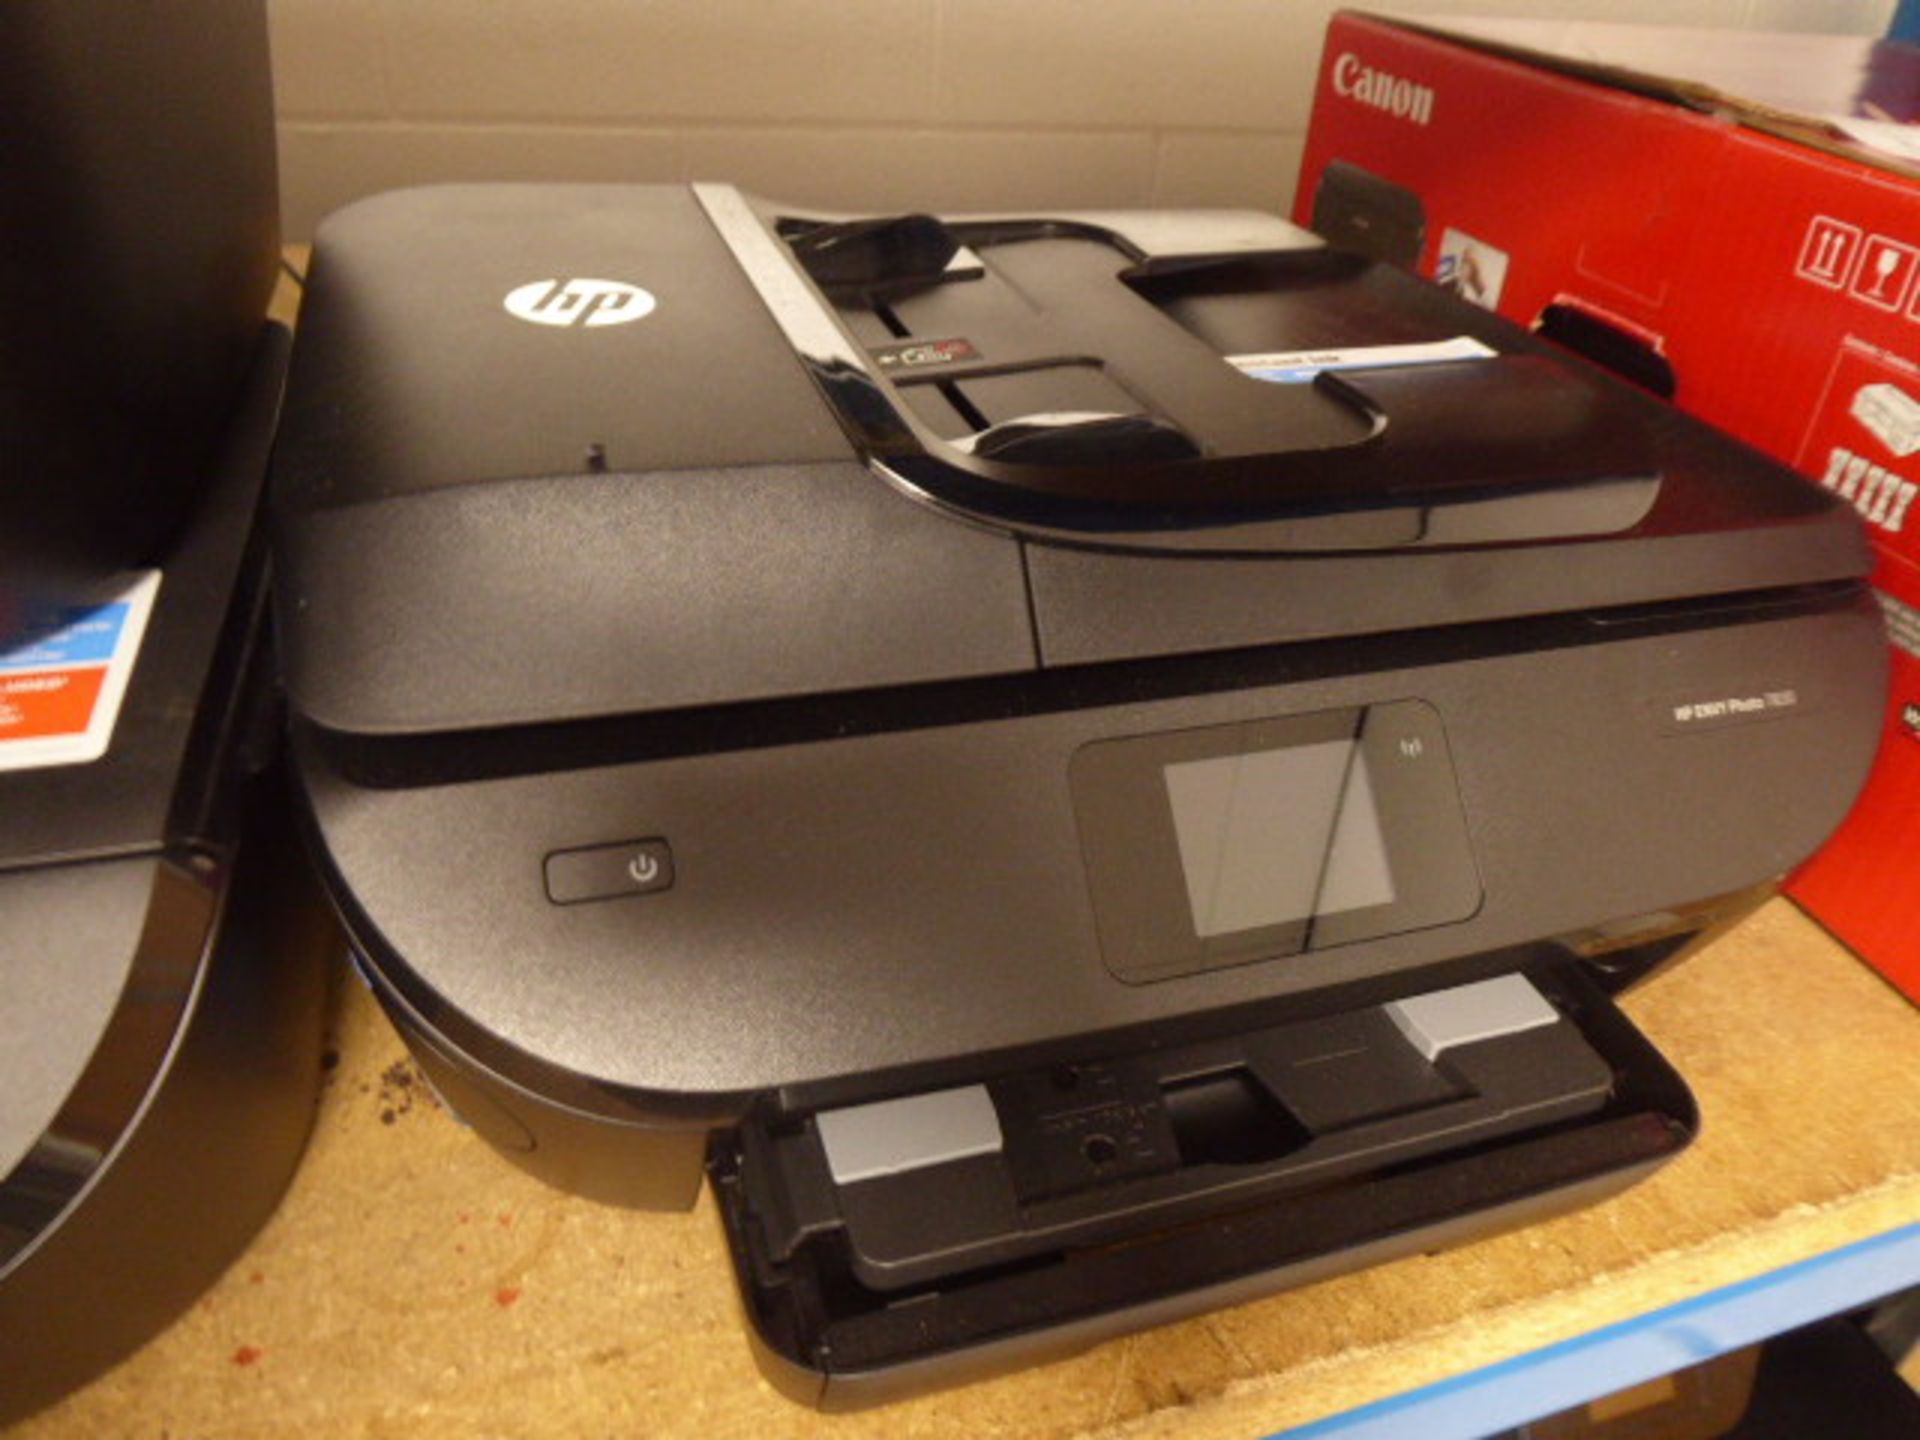 3 HP Envy photo printers models 7830 and 6220 - Image 3 of 3